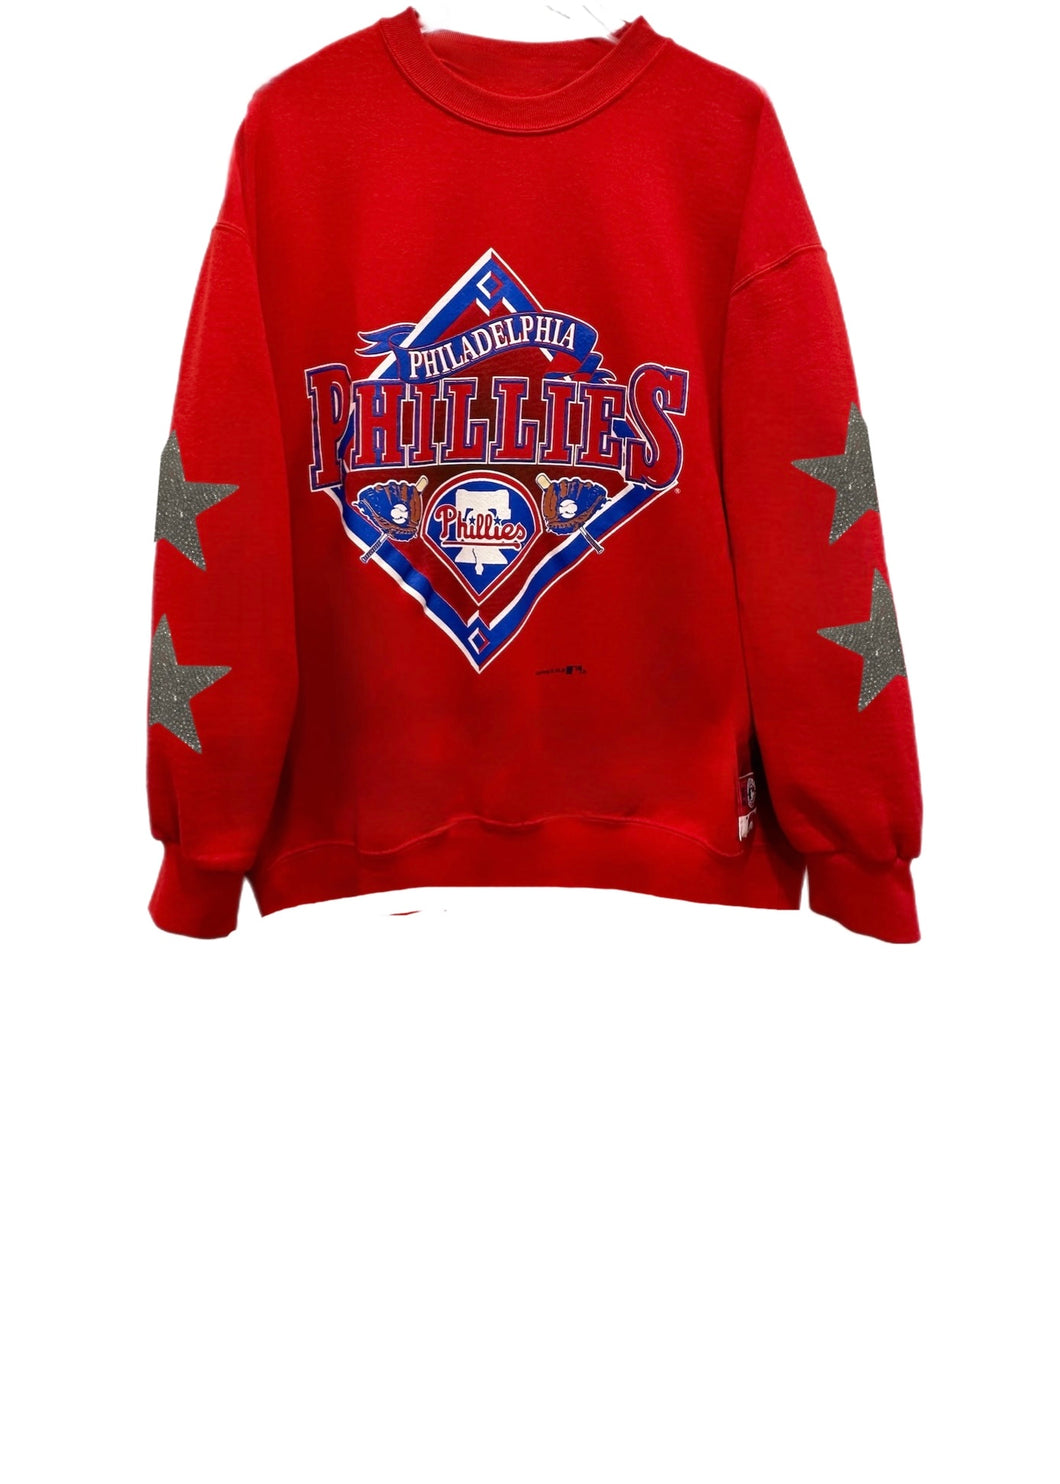 Philadelphia Phillies, MLB One of a KIND “Rare Find” Vintage Sweatshirt with Crystal Star Design